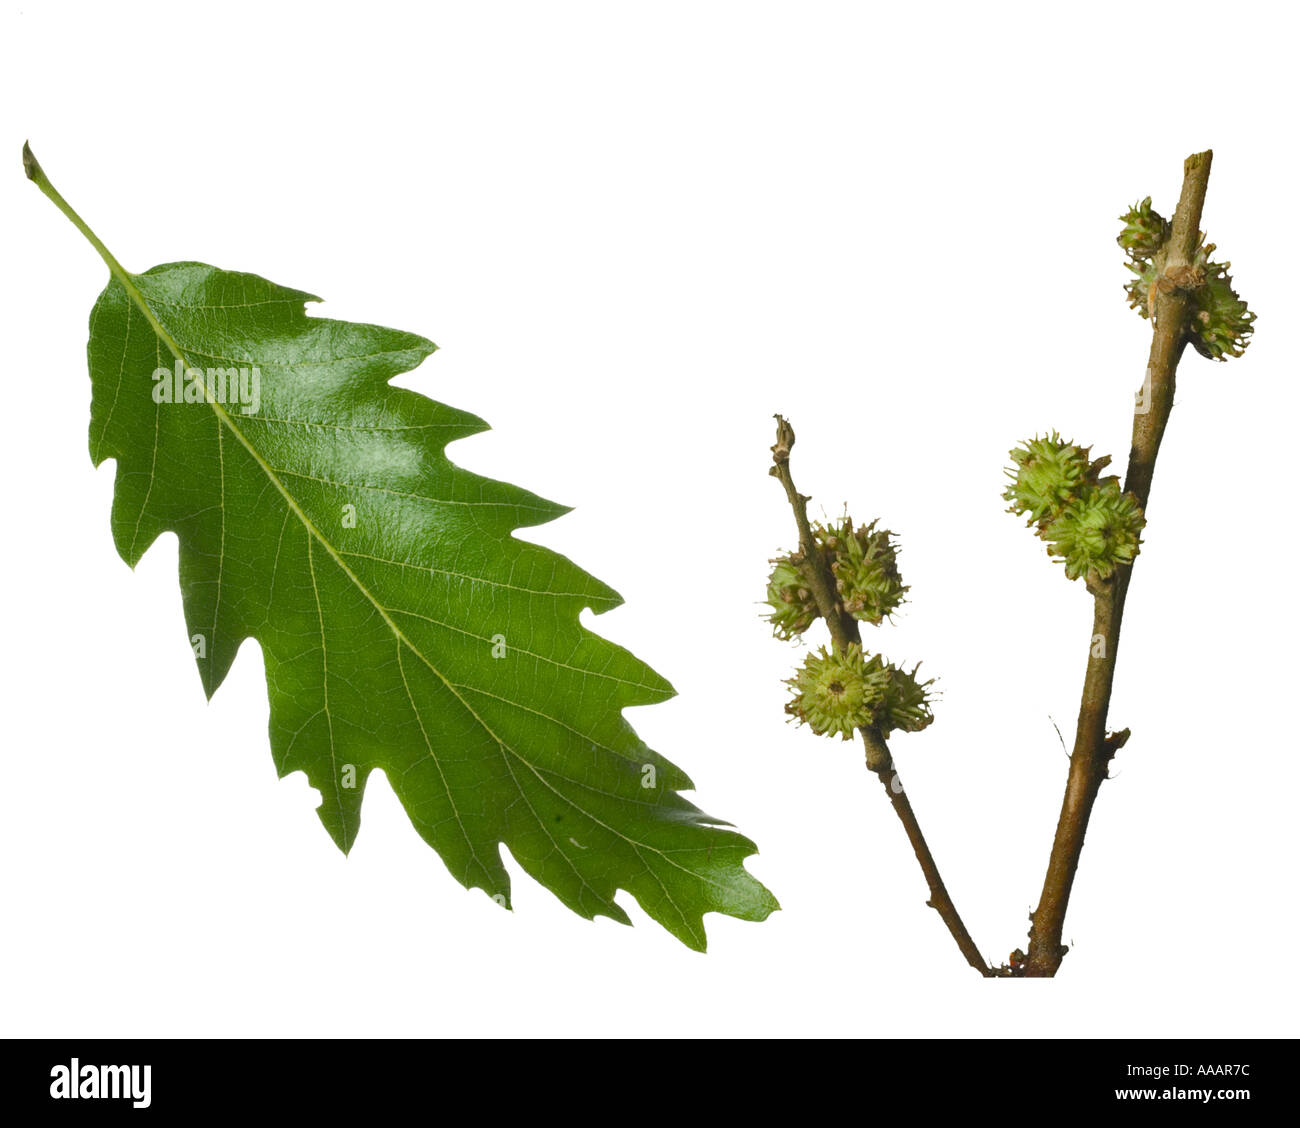 Turkey Oak Quercus cerris Lobed Leaf developing mossy cup of acorn Surrey England June Stock Photo